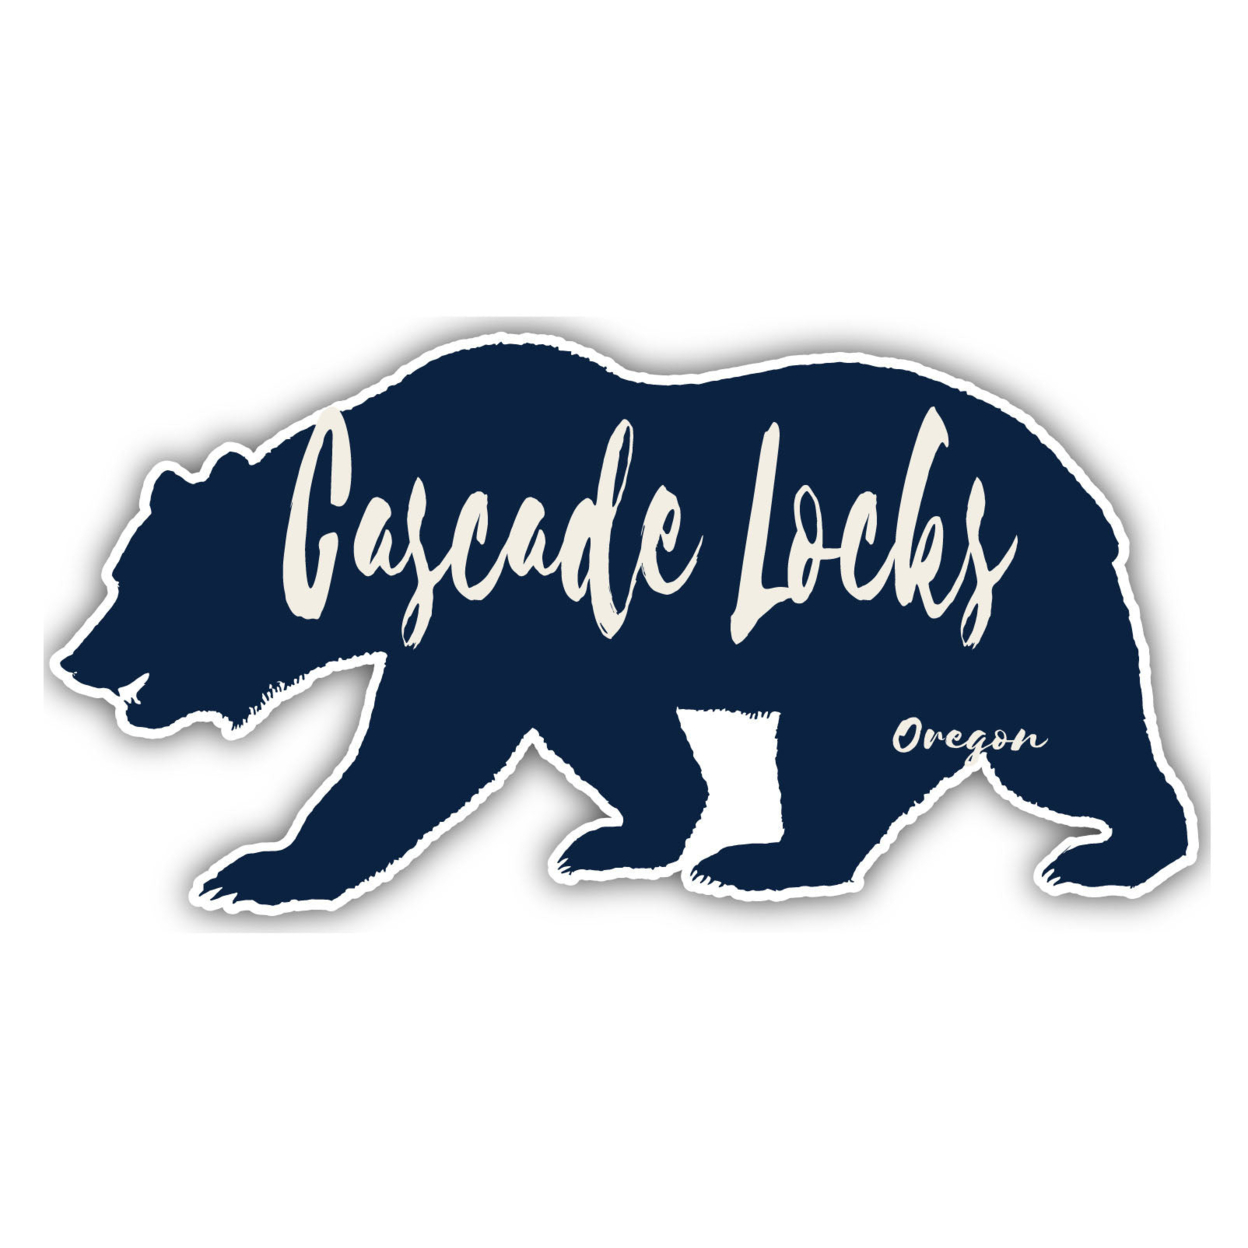 Cascade Locks Oregon Souvenir Decorative Stickers (Choose Theme And Size) - 4-Pack, 12-Inch, Adventures Awaits